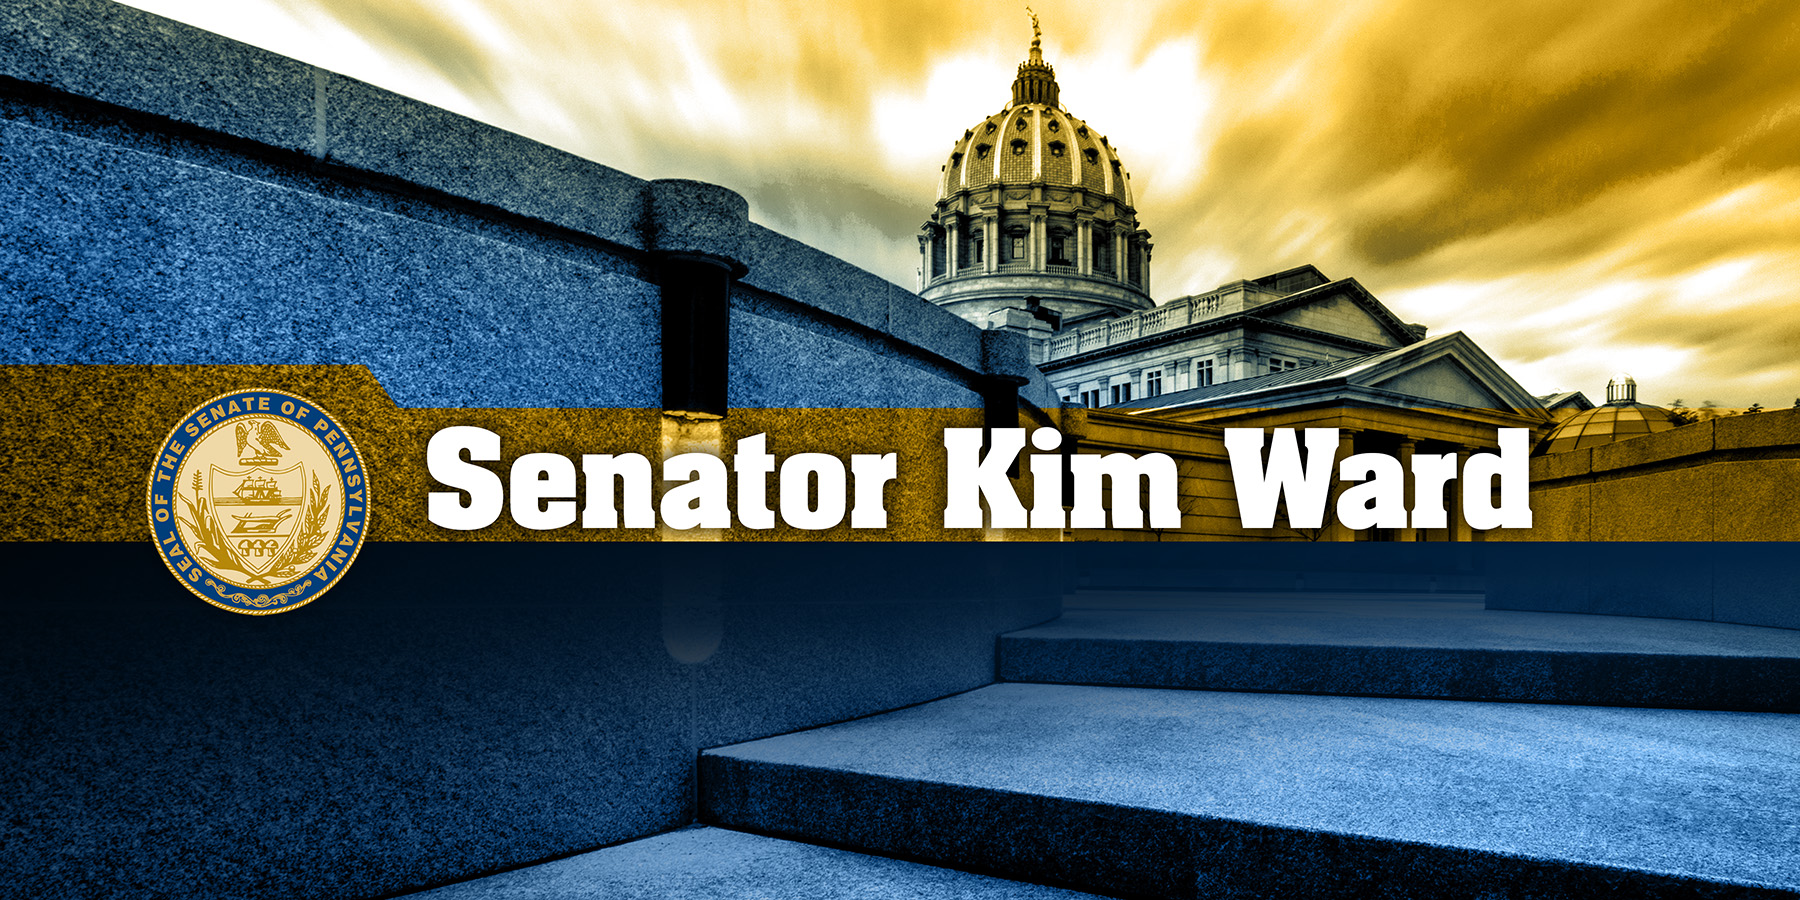 Senate President Pro Tempore Kim Ward Statement Shapiro’s RGGI Appeal Demonstrates Lack of Leadership